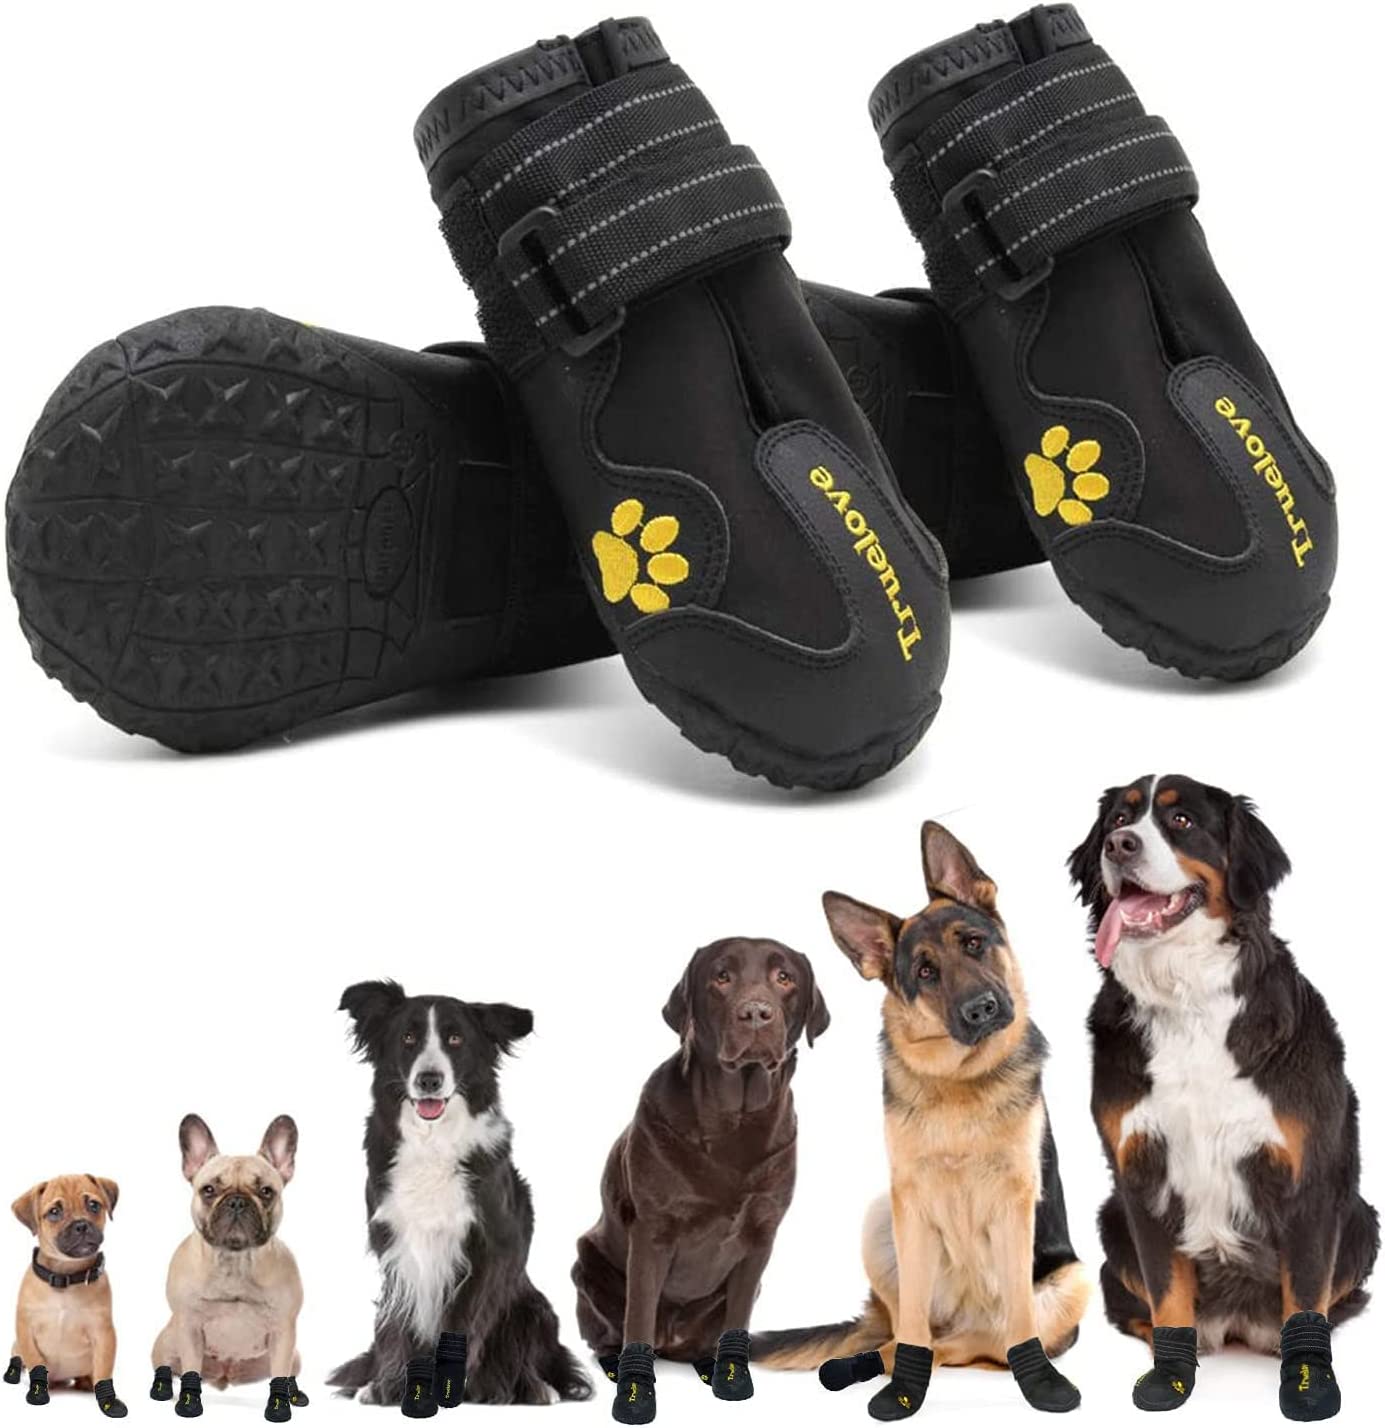 Expawlorer Anti-Collision Toe Nap Dog Boots